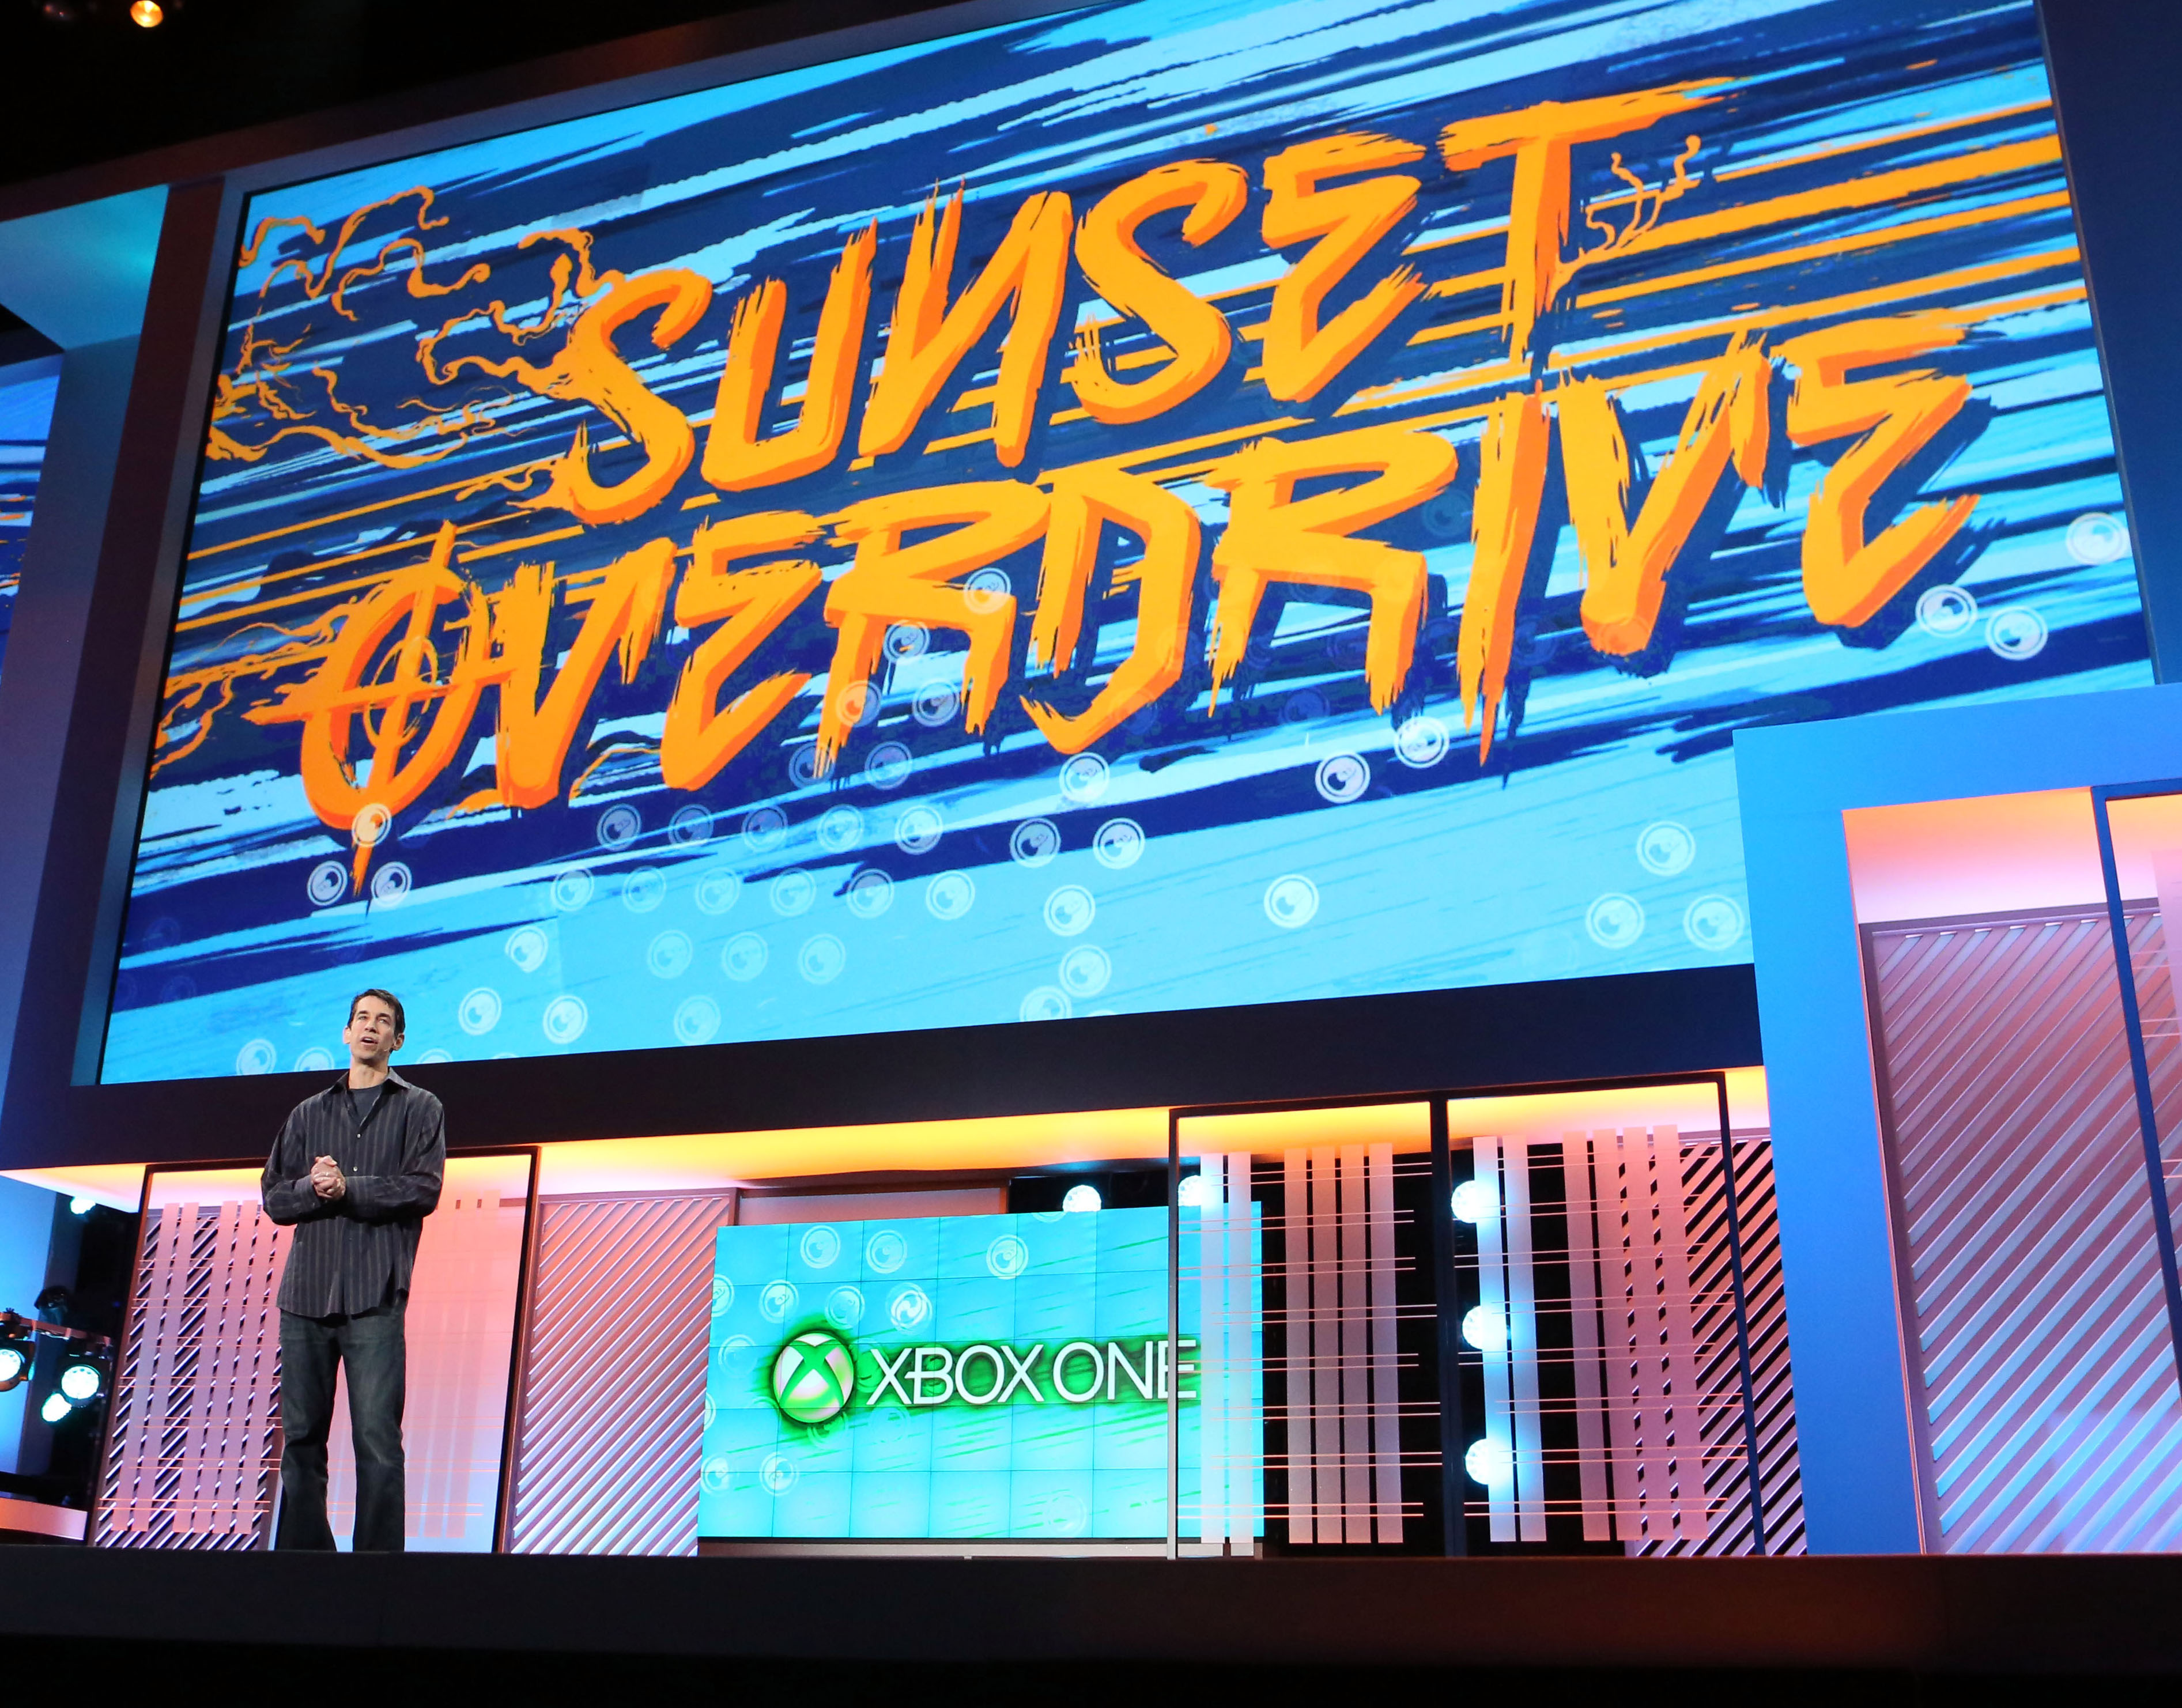 Sunset Overdrive – Windows 10 PC Launch Trailer 